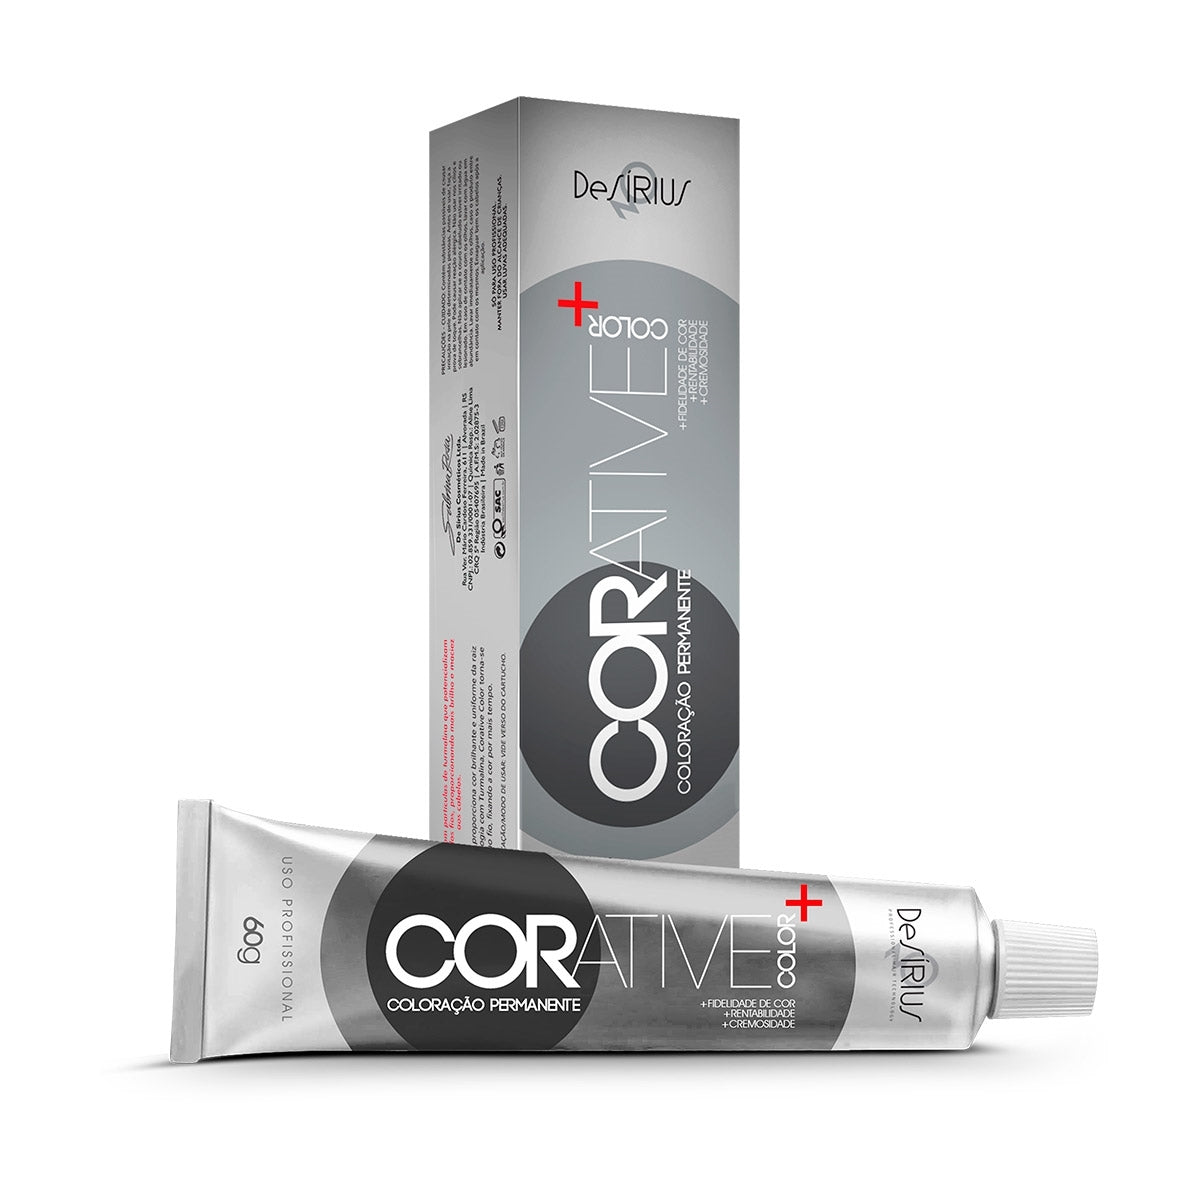 CORATIVE COLORATION - 7.0 MEDIUM BLOND - 60G FS Cosmetics